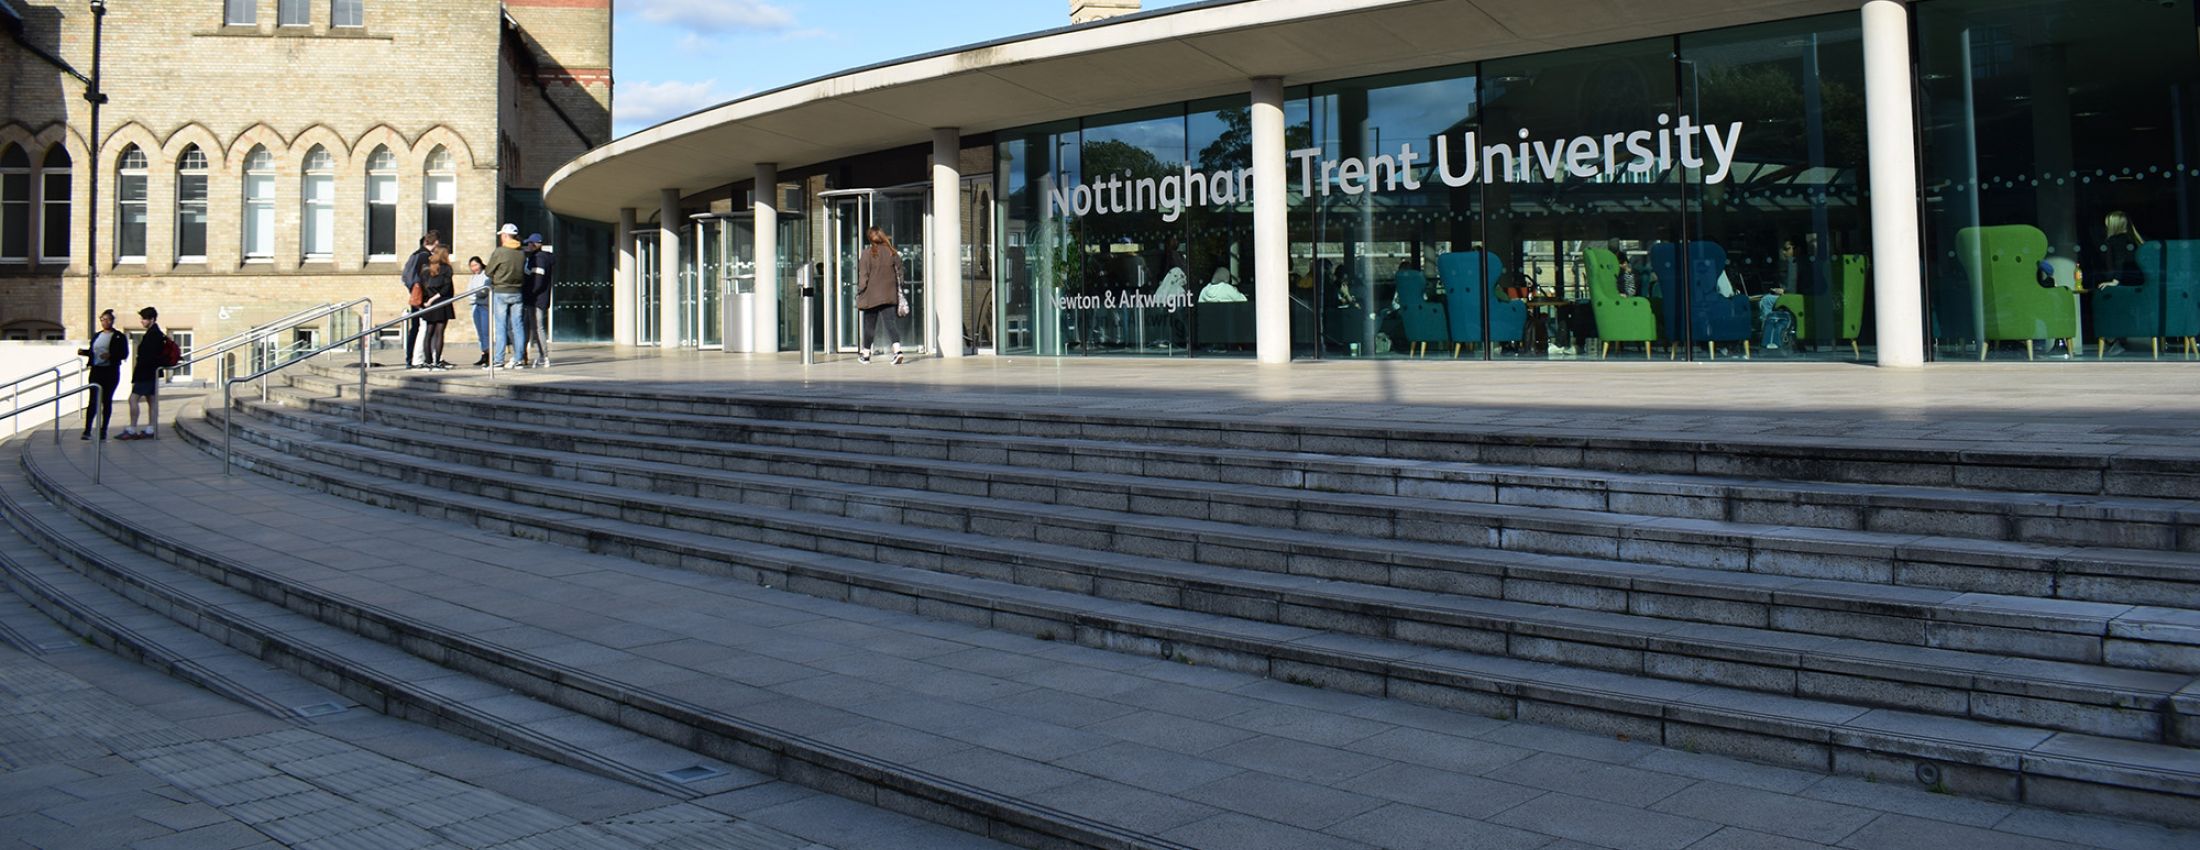 Study in Nottingham Trent University with Scholarship